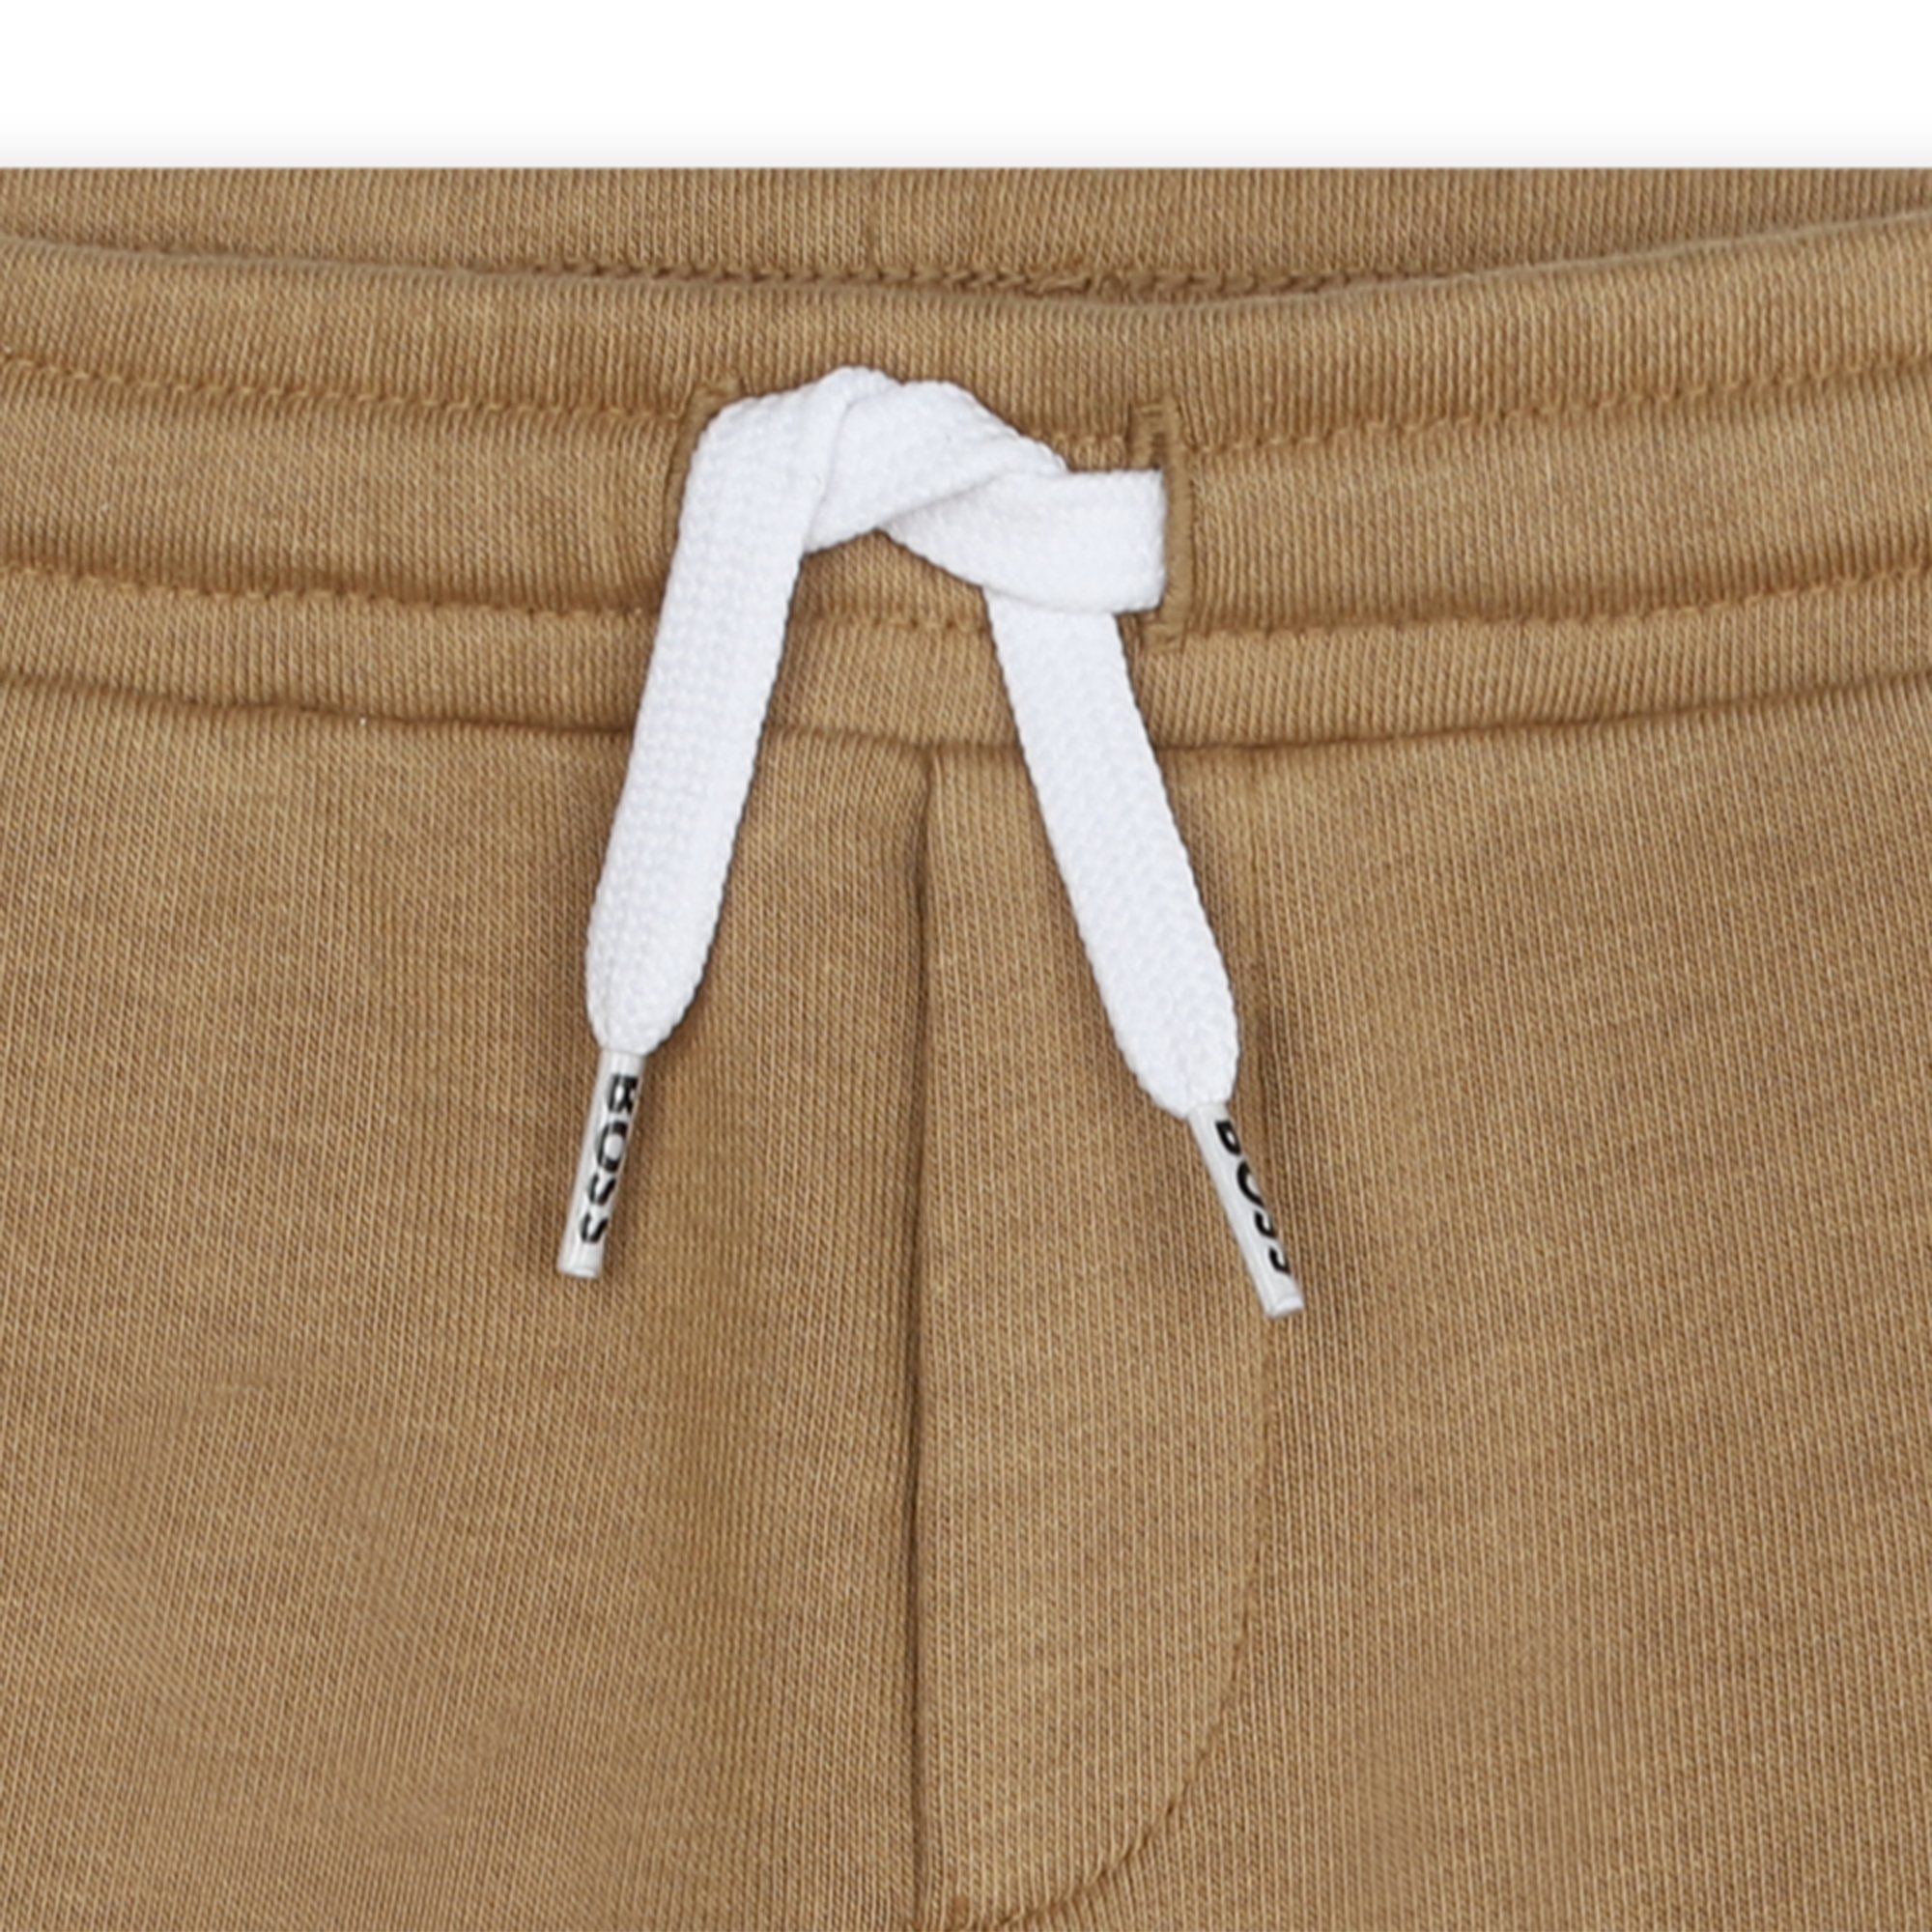 Pantaloncini in felpa con logo BOSS Per RAGAZZO